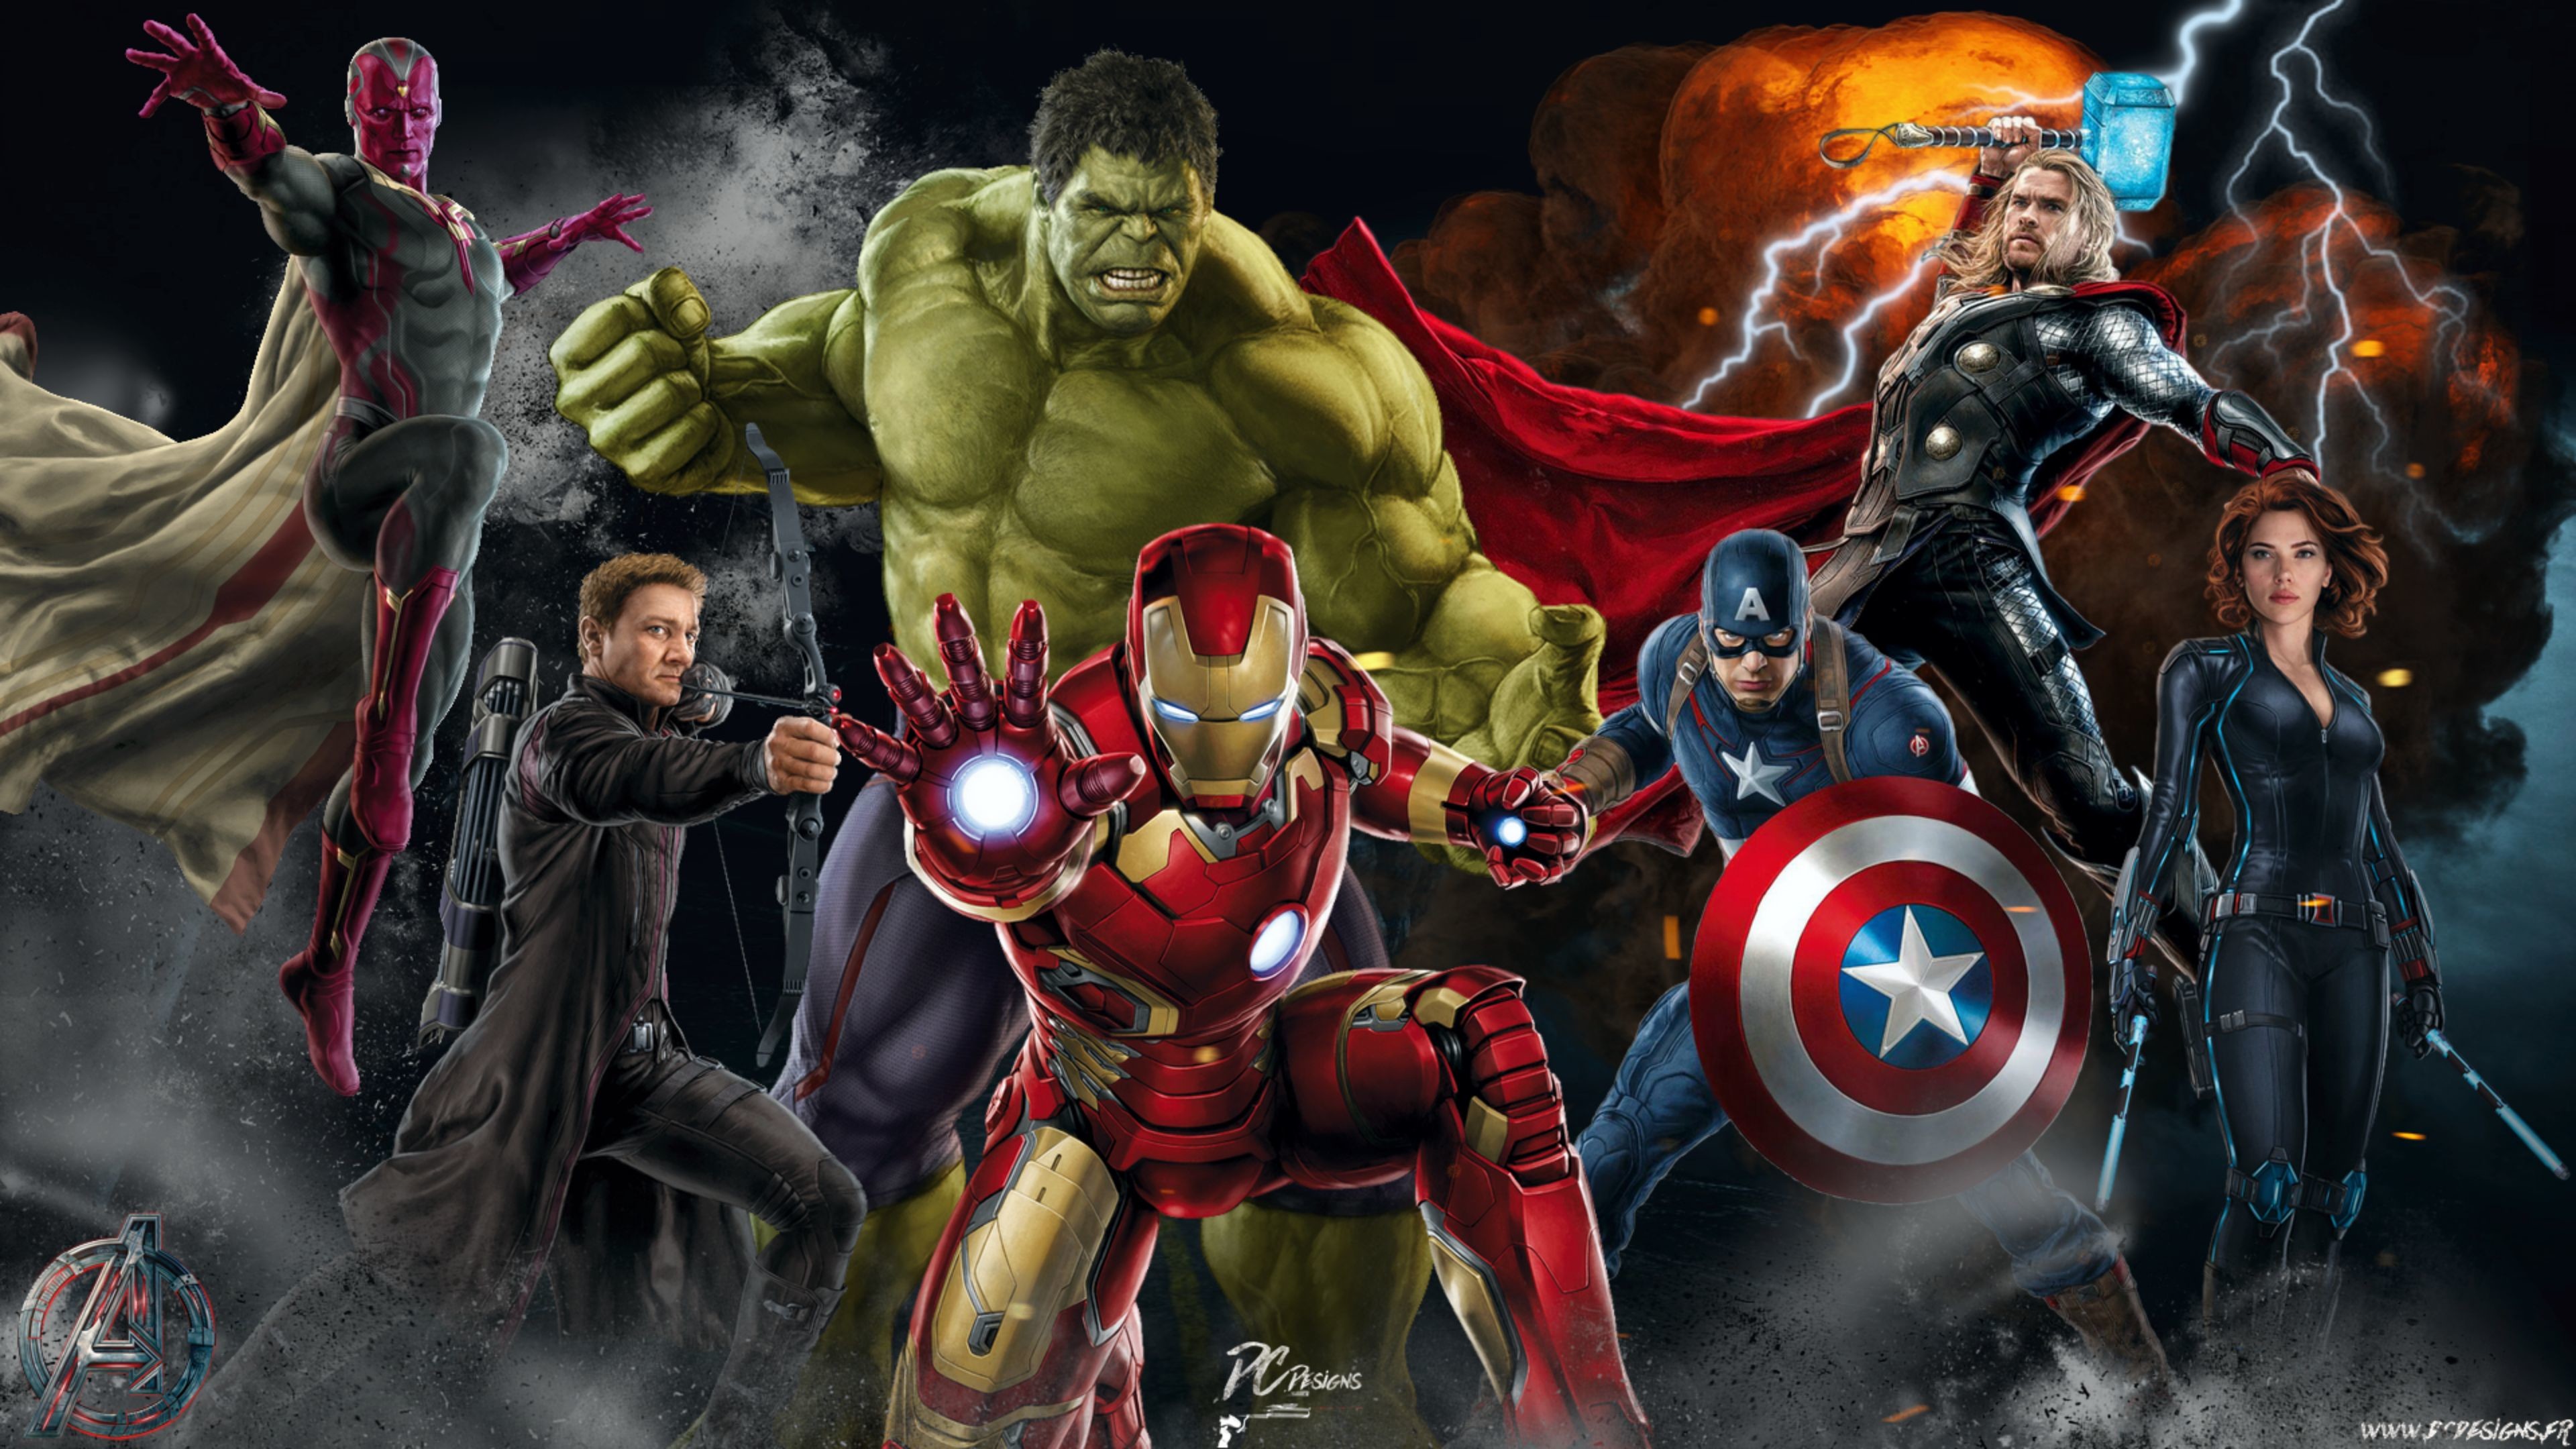 3840x2160 Avengers Age Of Ultron Tony Stark (iron Man) Ultra Hd 4k Wallpaper 3840Ã2160